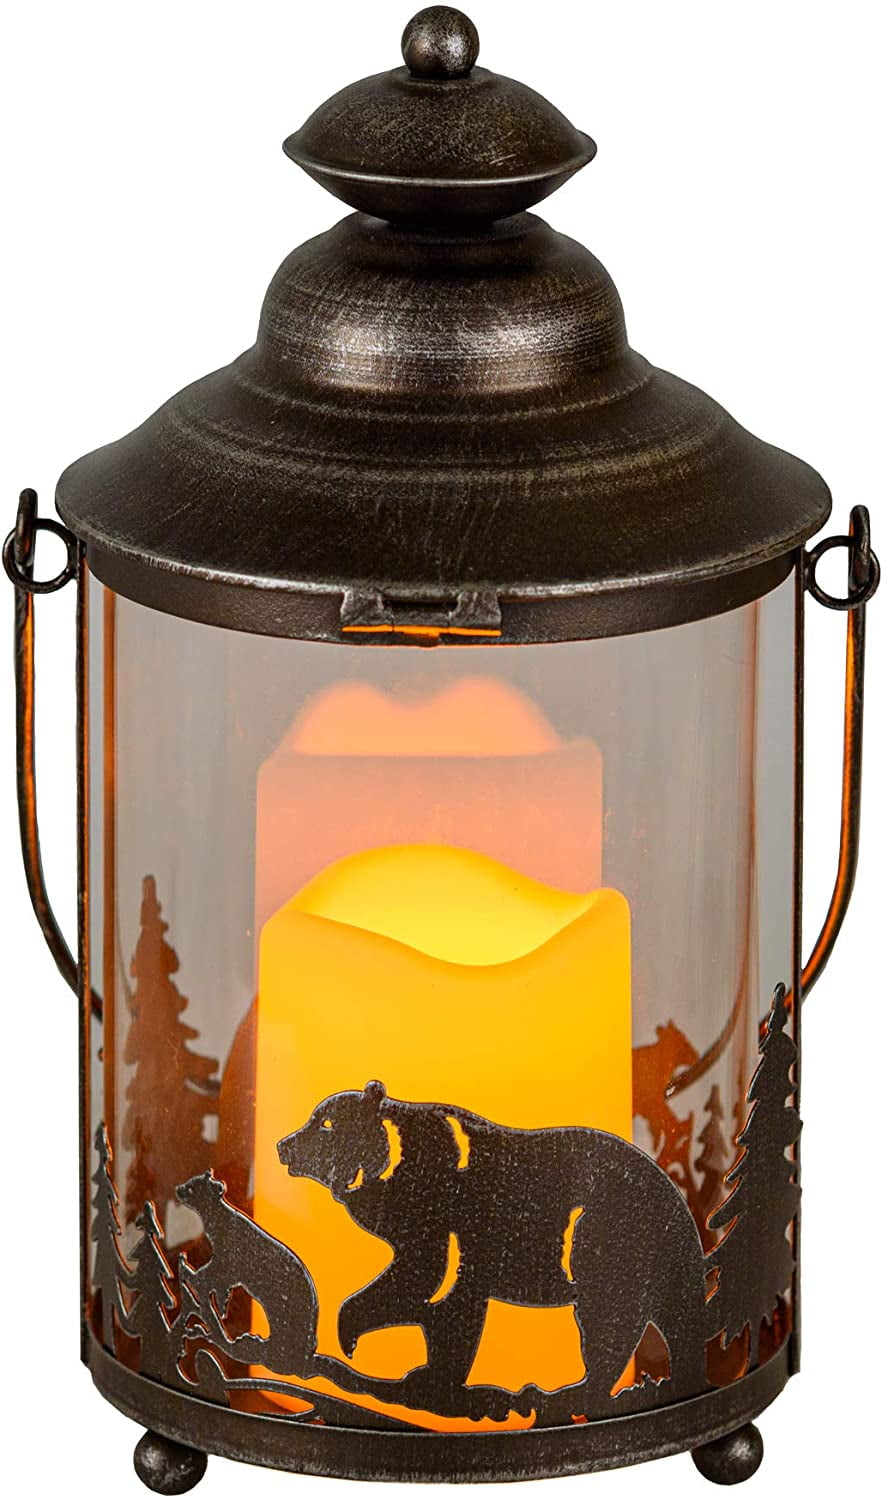 Bear LED Candle Lantern Lights Decorative - LG Round Glass Holder Table